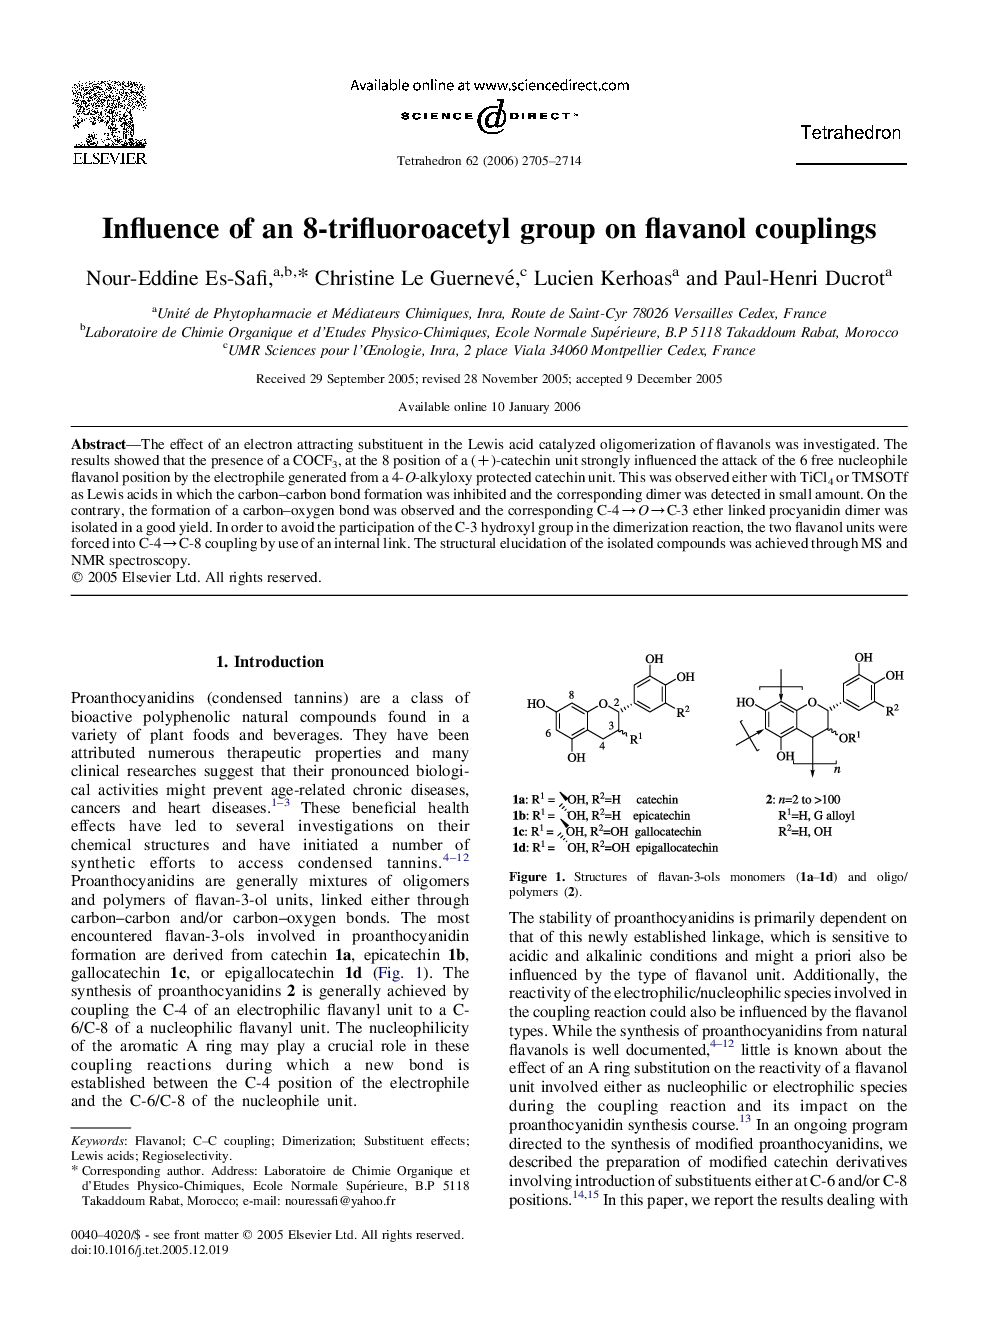 Influence of an 8-trifluoroacetyl group on flavanol couplings